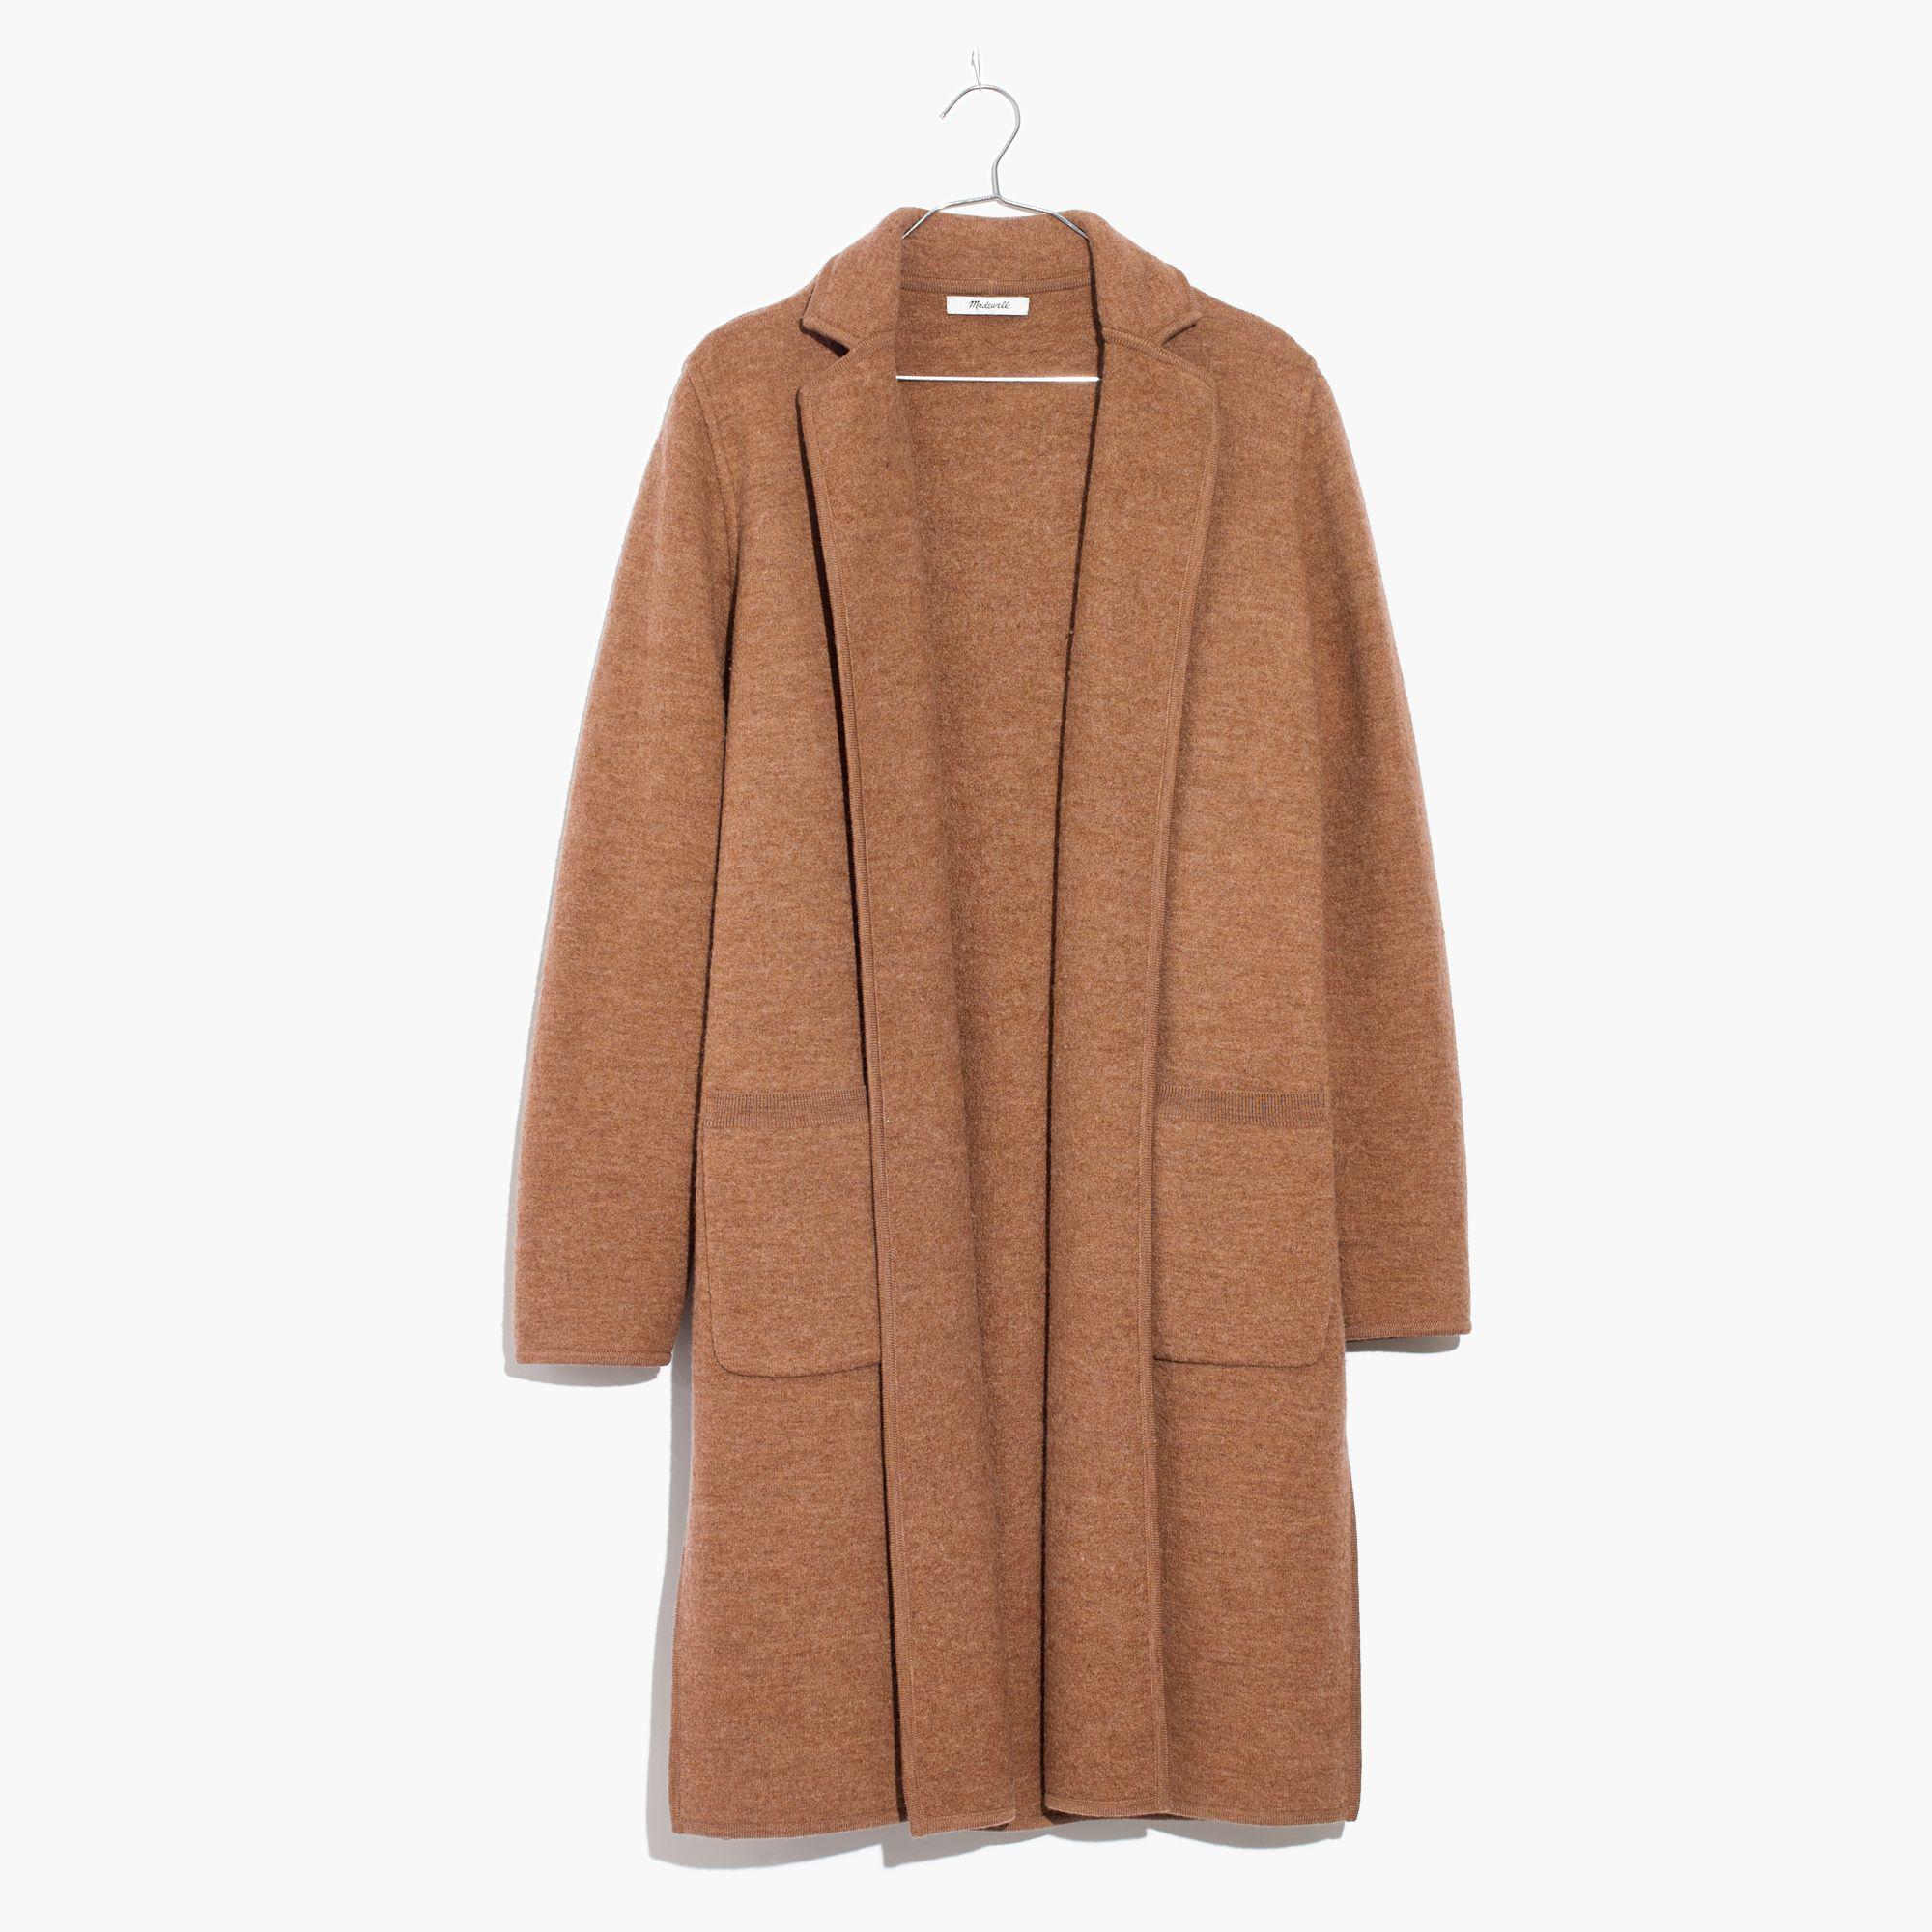 Madewell Wool Camden Sweater-coat in Heather Caramel (Brown) - Lyst